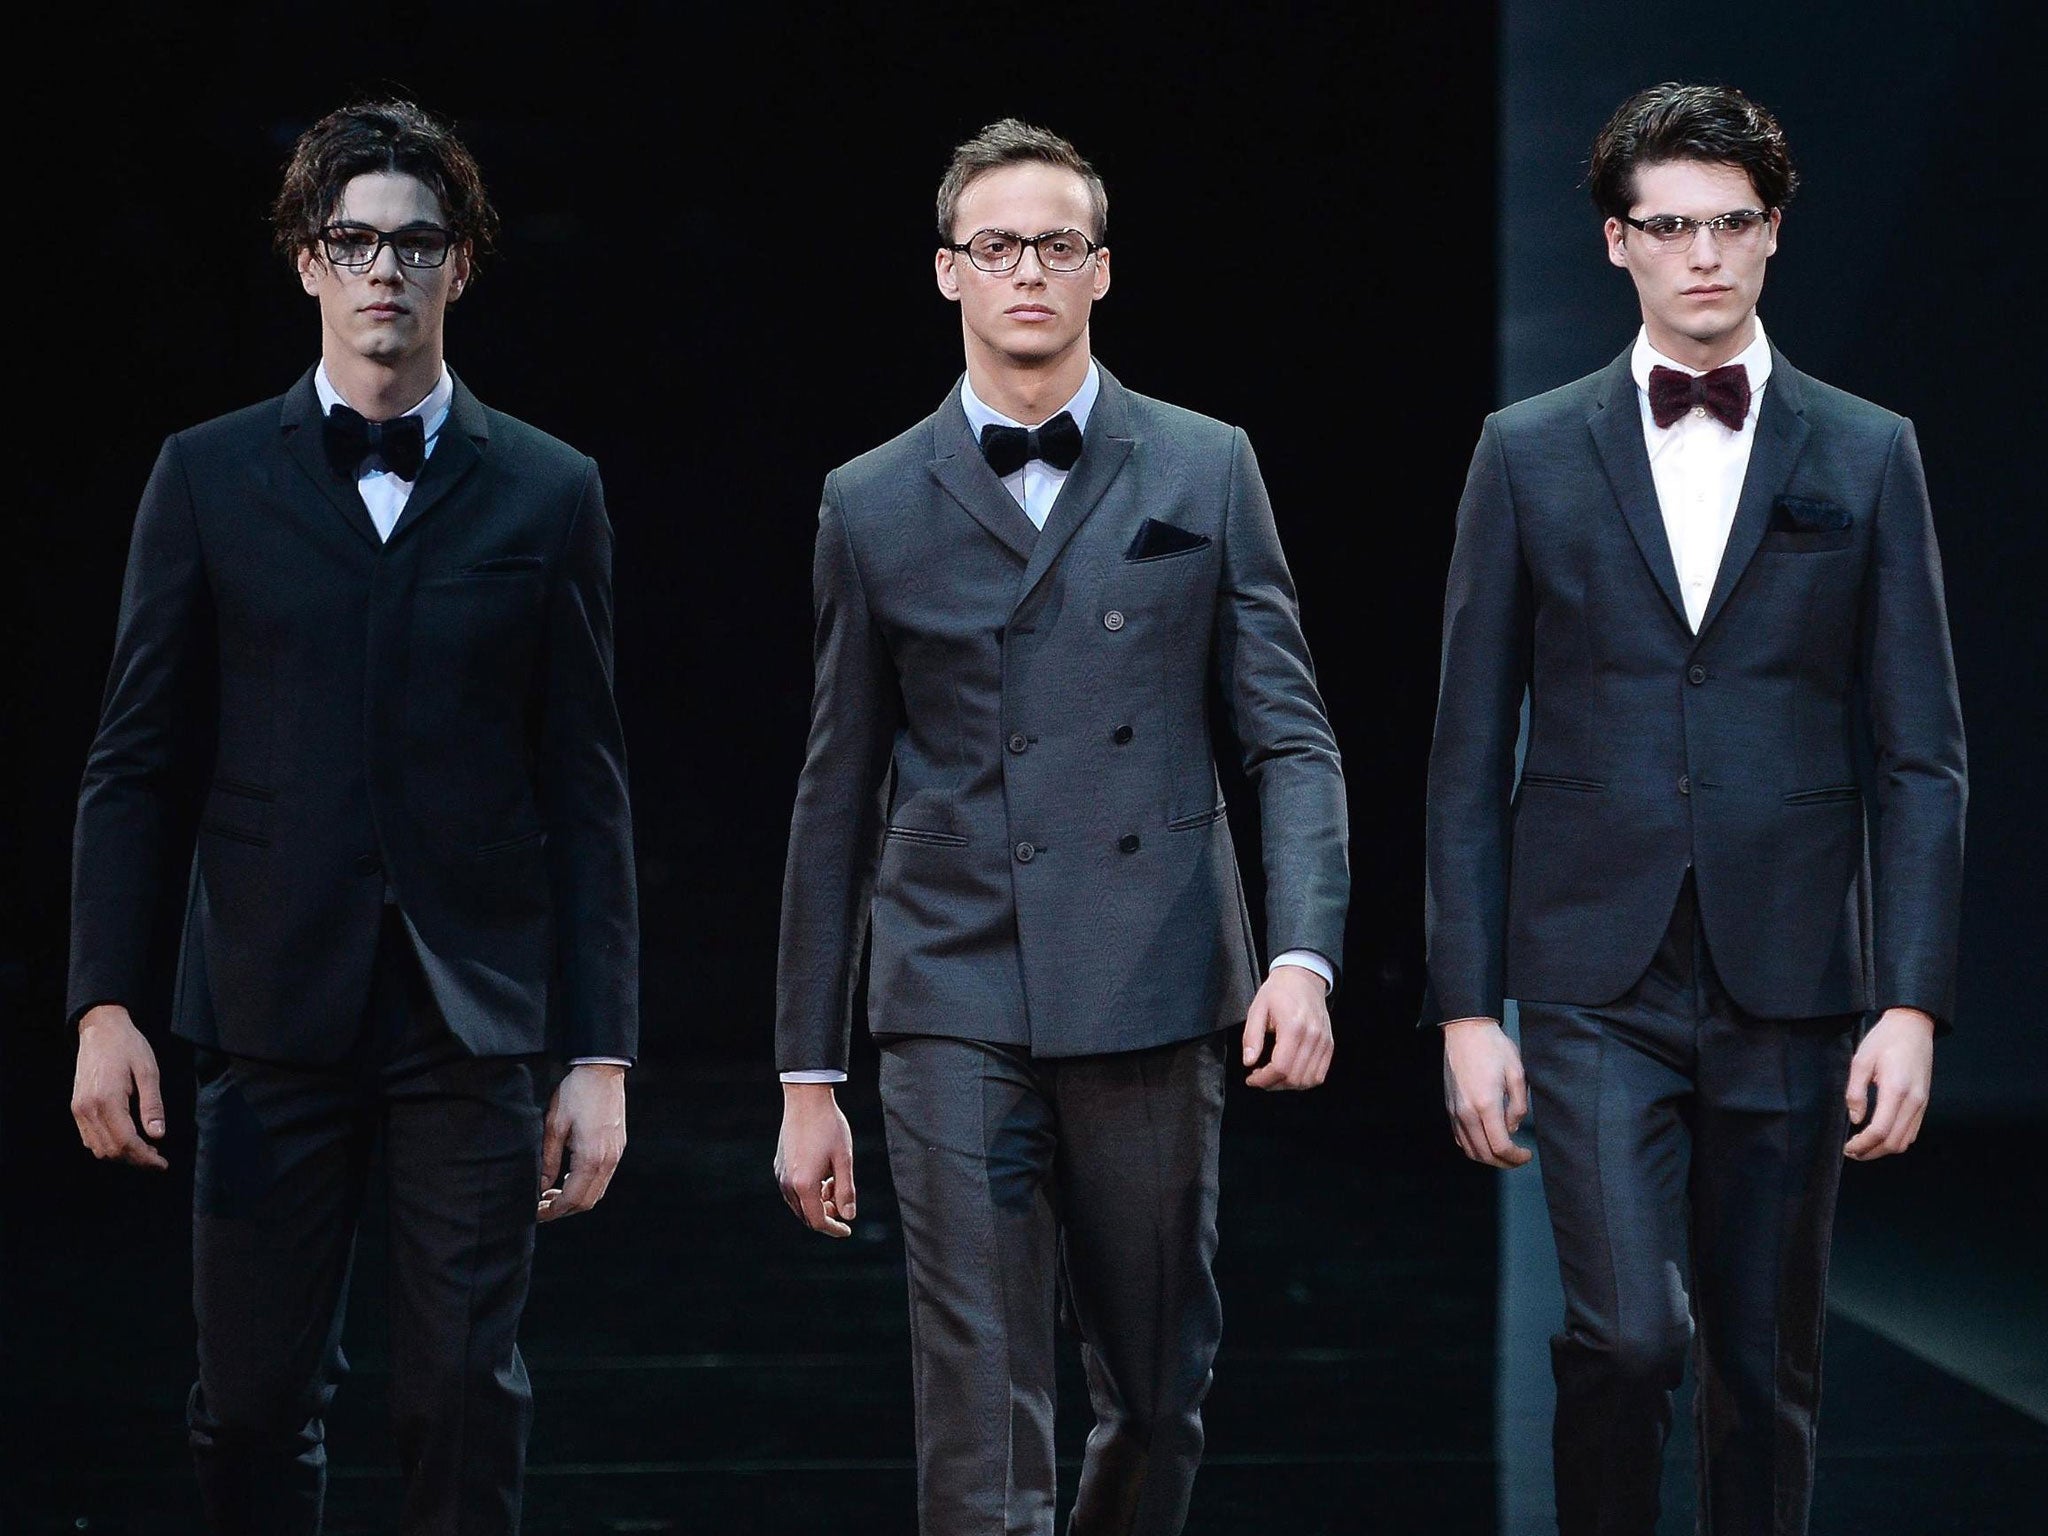 Gucci and Emporio Armani at Milan Fashion Week: Italian classics